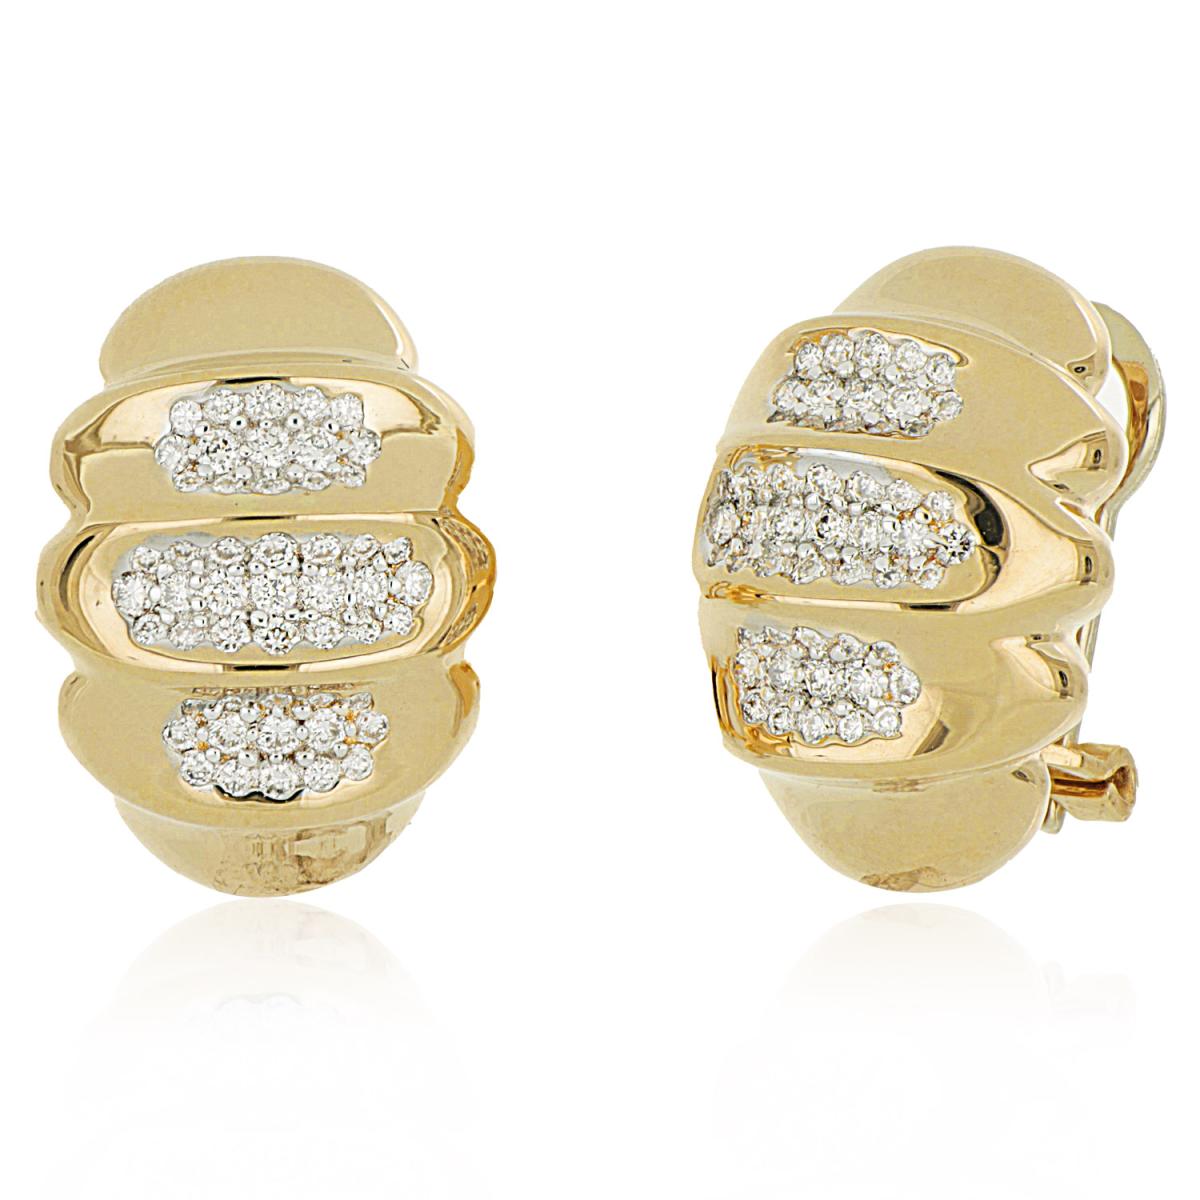 Gold and diamond earrings - OD865